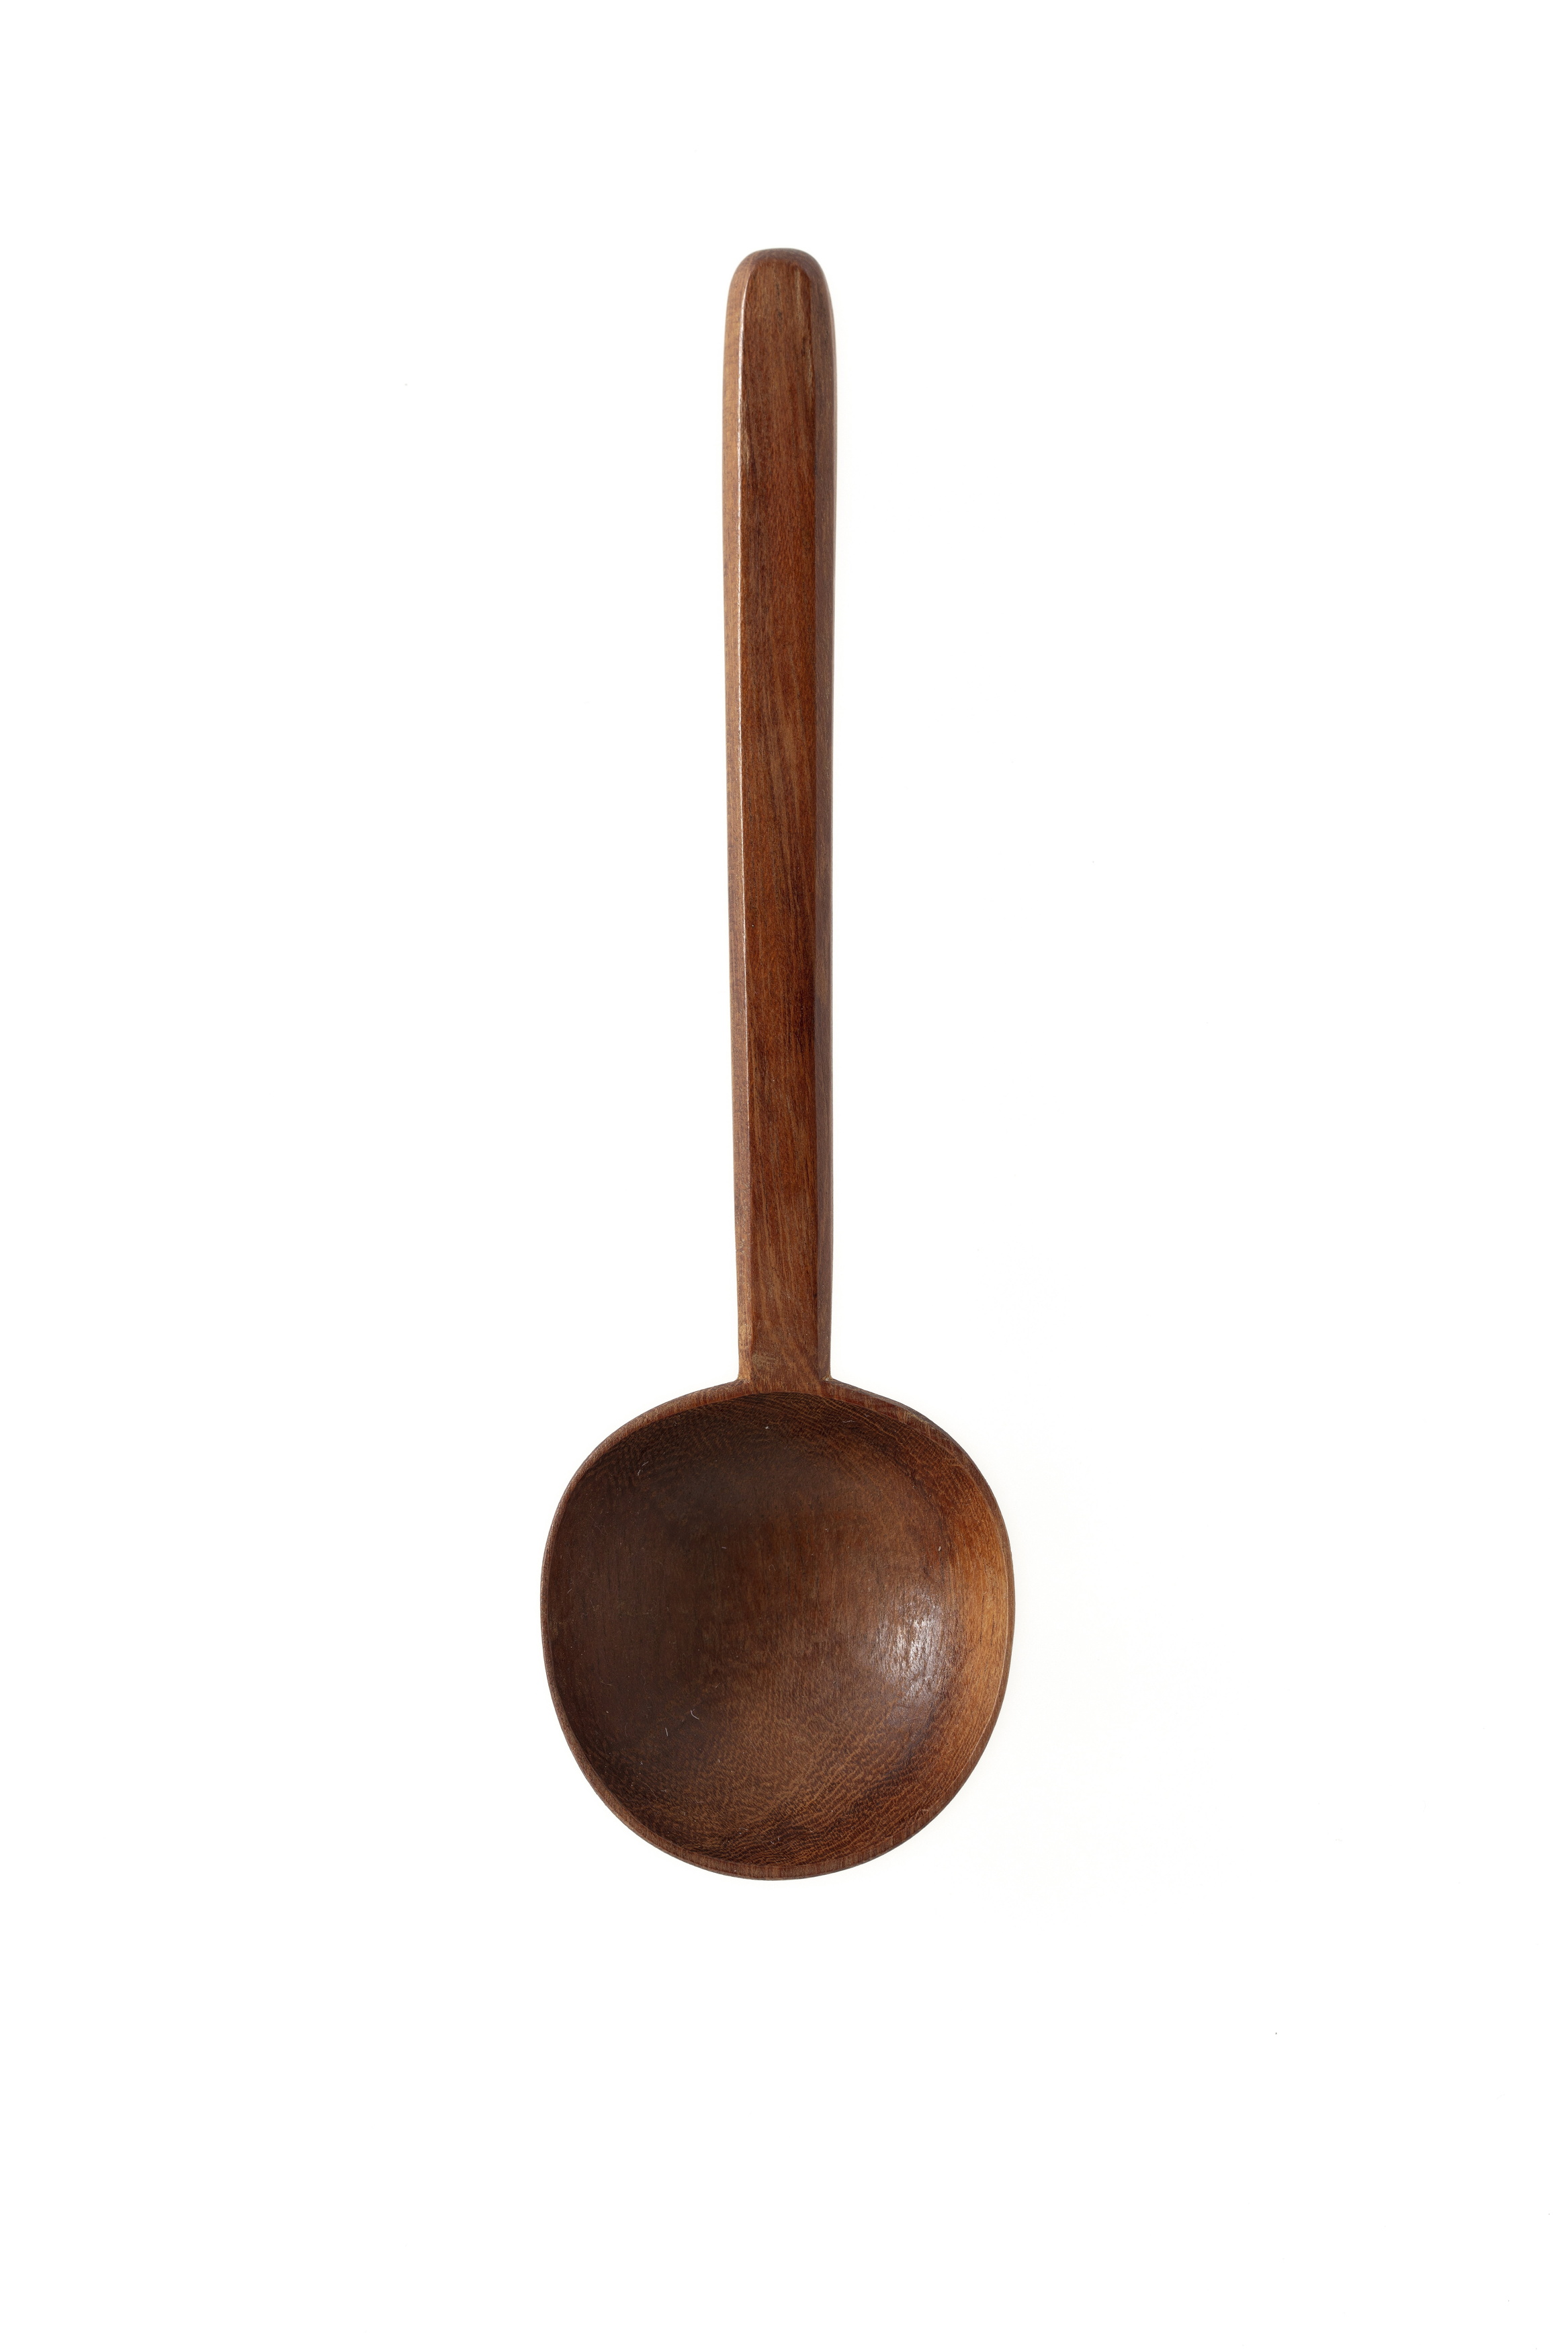 Wooden spoon by Levi Borgstrom